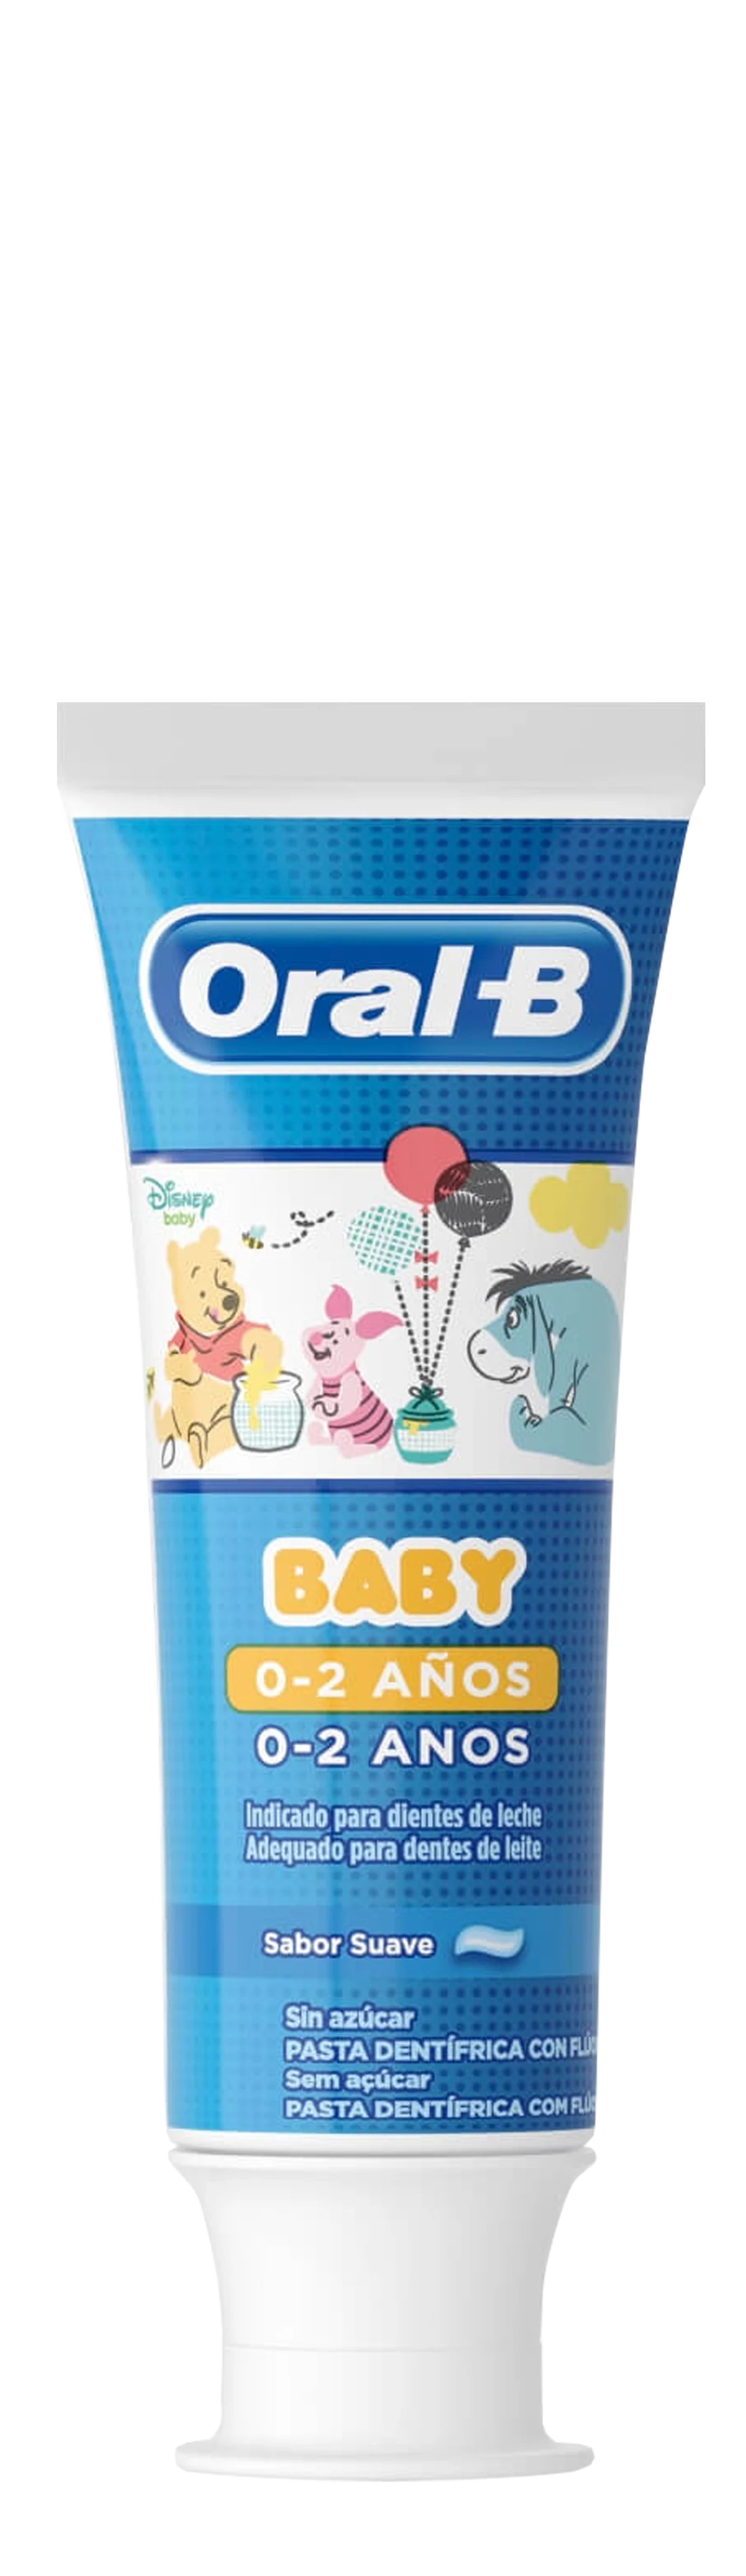 Oral-B Baby Winnie The Pooh Pasta Dentífrica 75 ml undefined